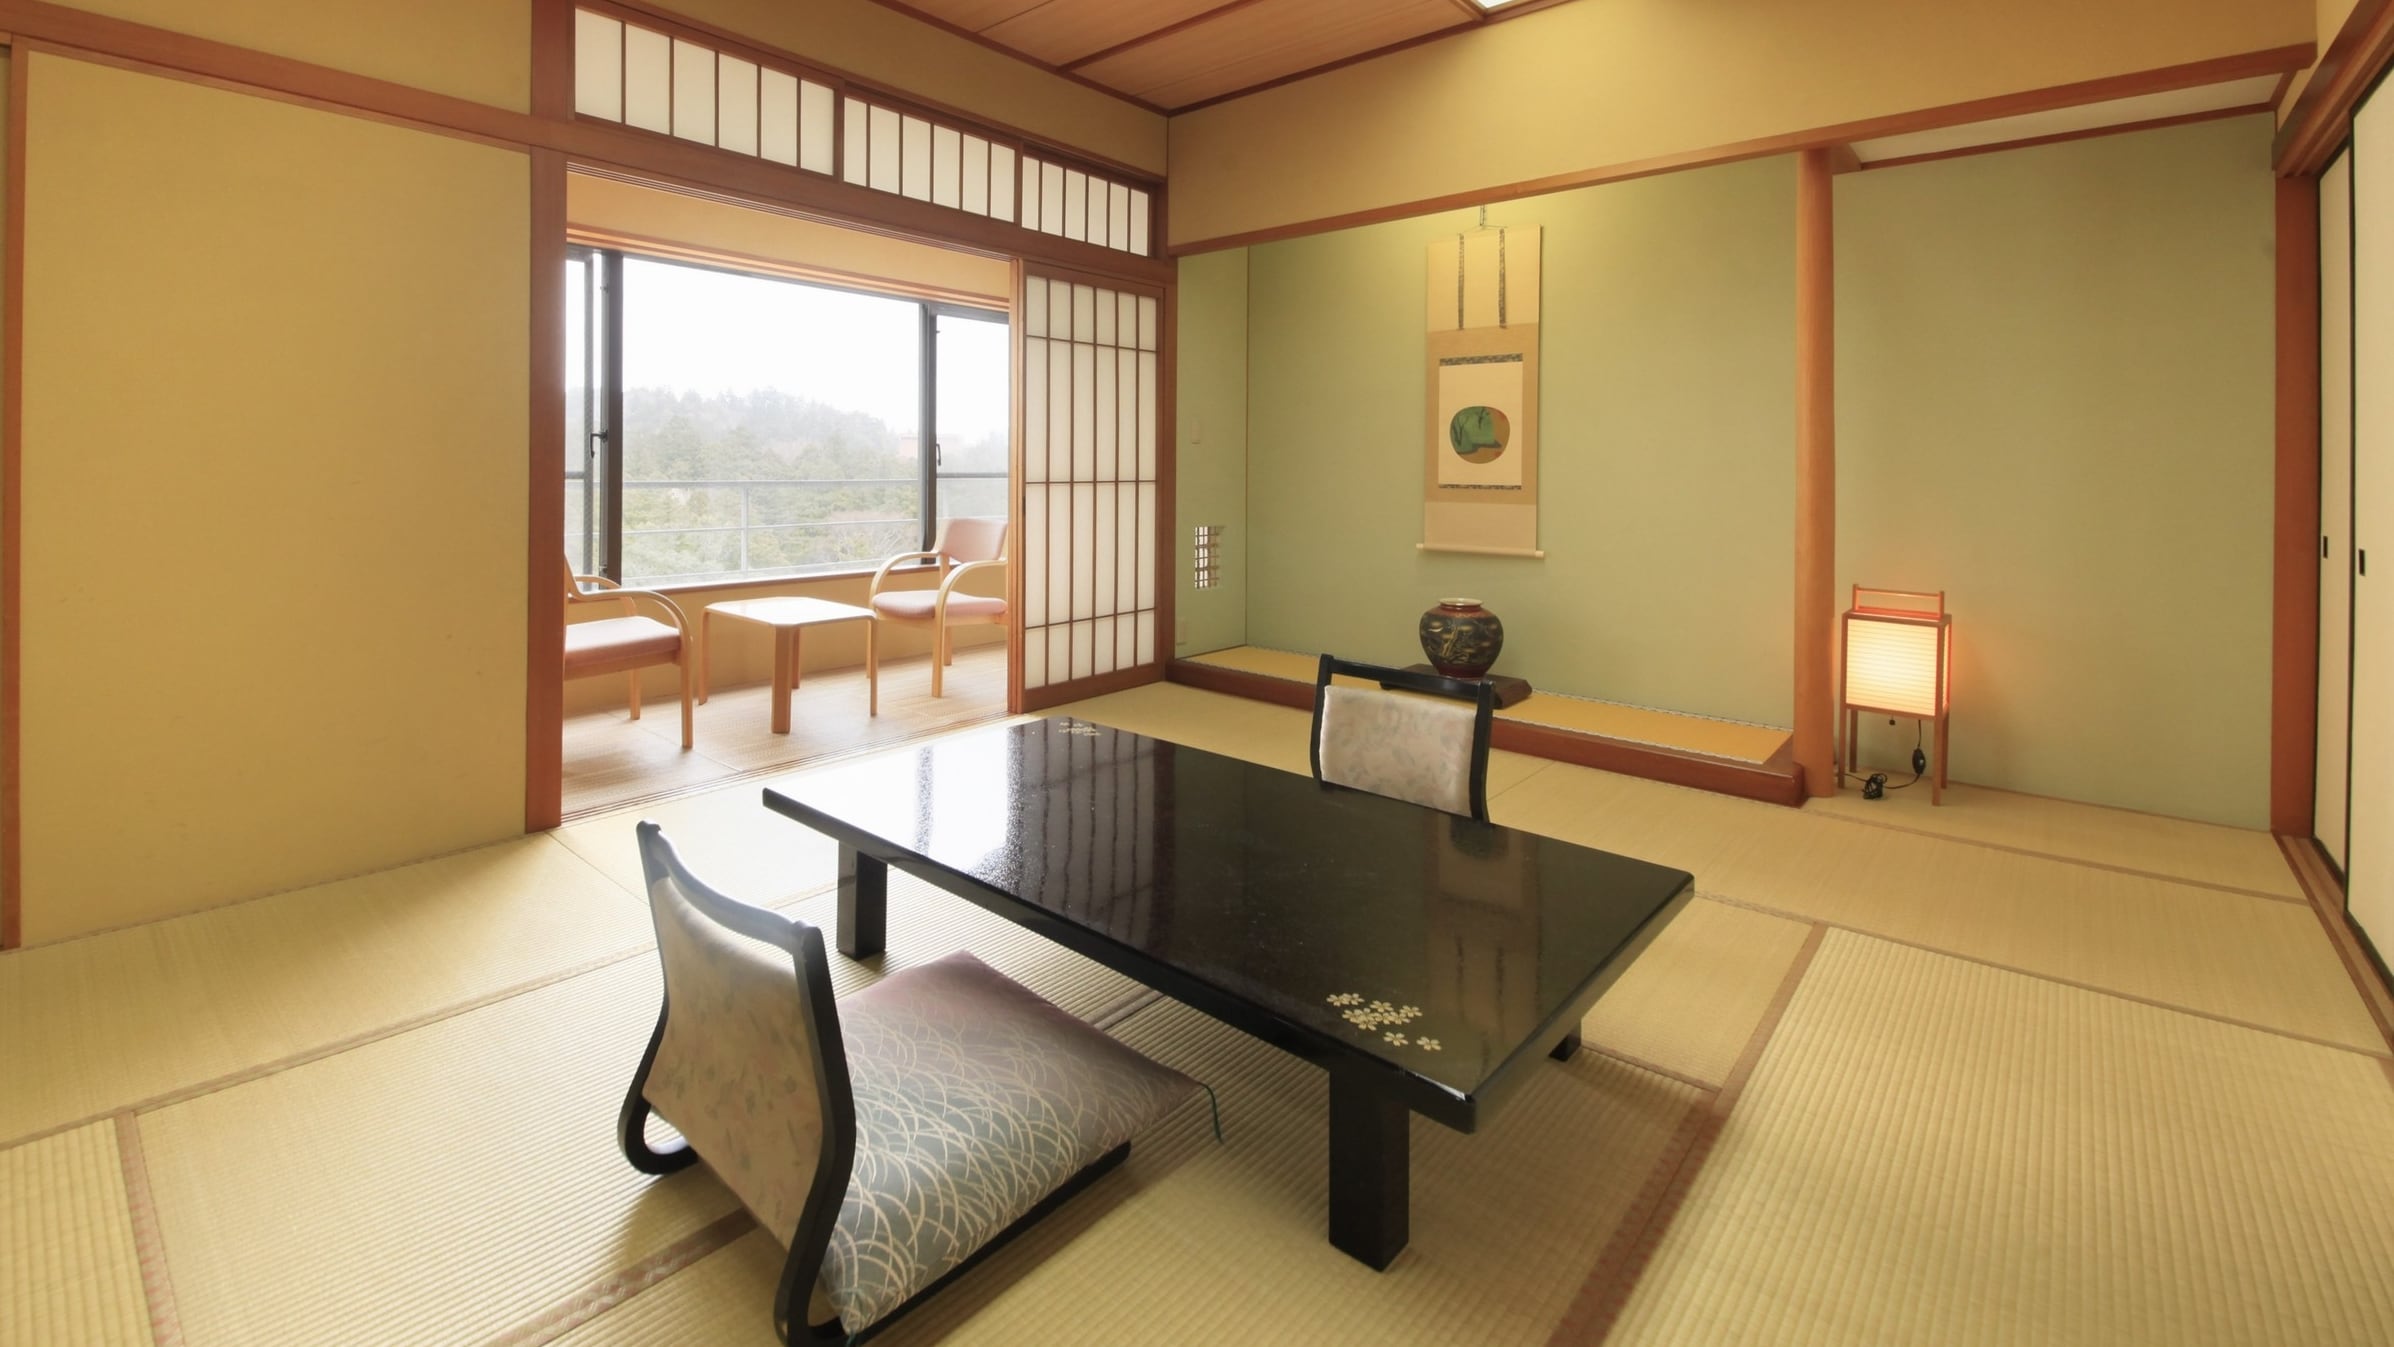 Japanese-style room 12 tatami mats + Japanese-style room 8 tatami mats + living room ★Guest rooms for groups